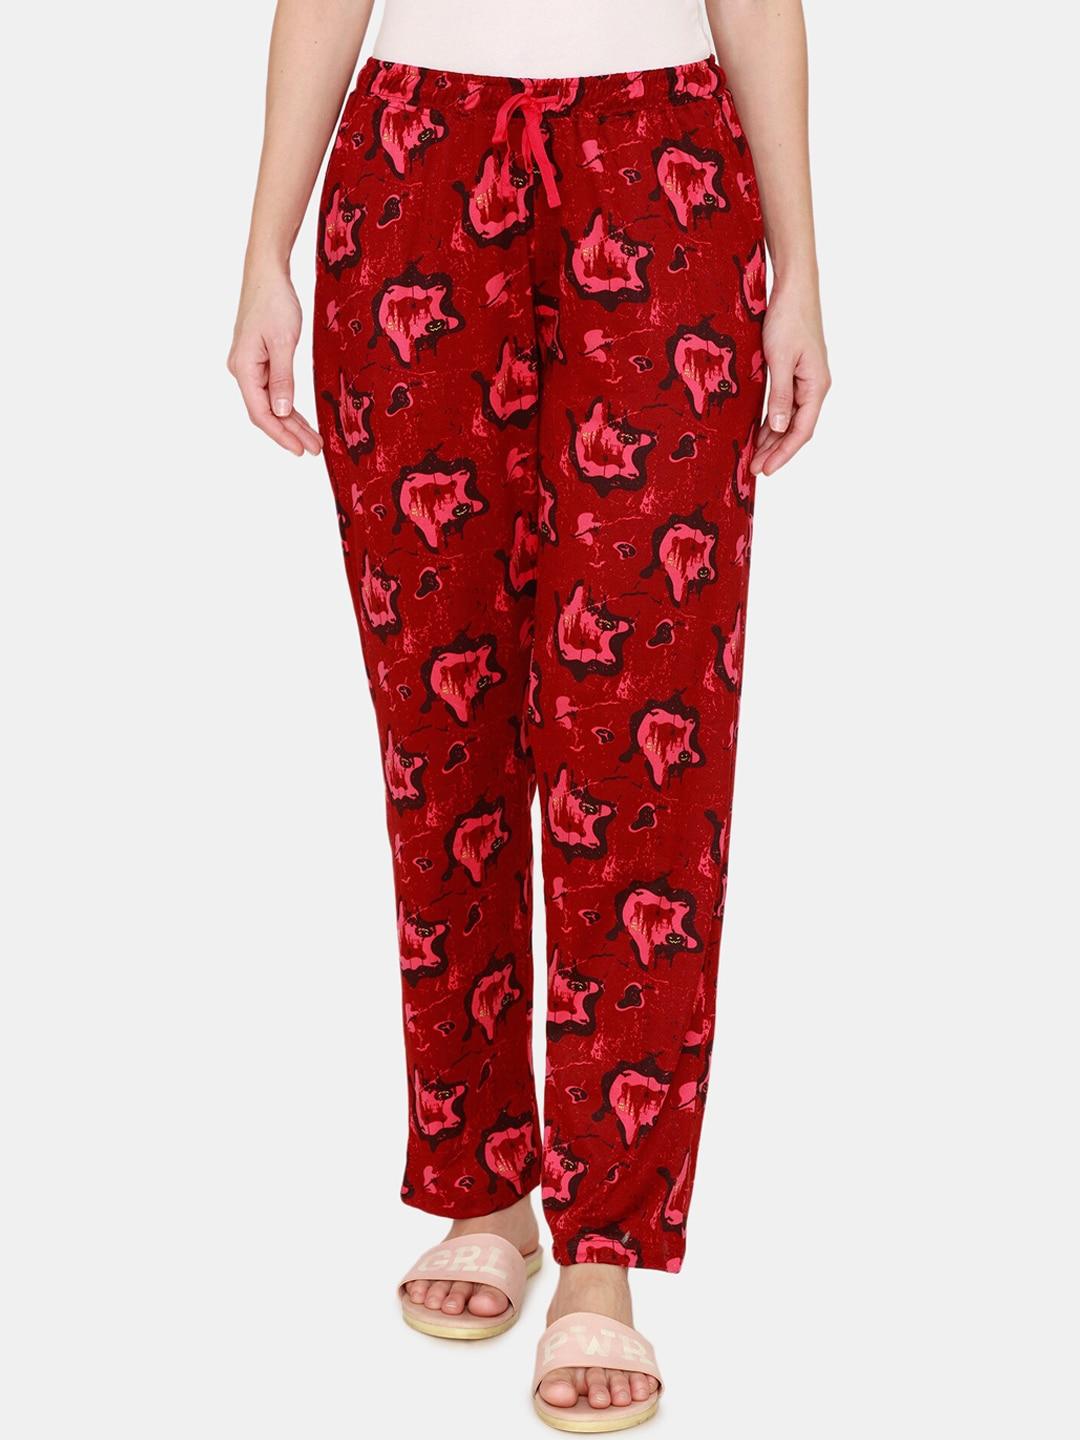 Zivame Women Red Halloween Printed Knitted Cotton Pyjamas